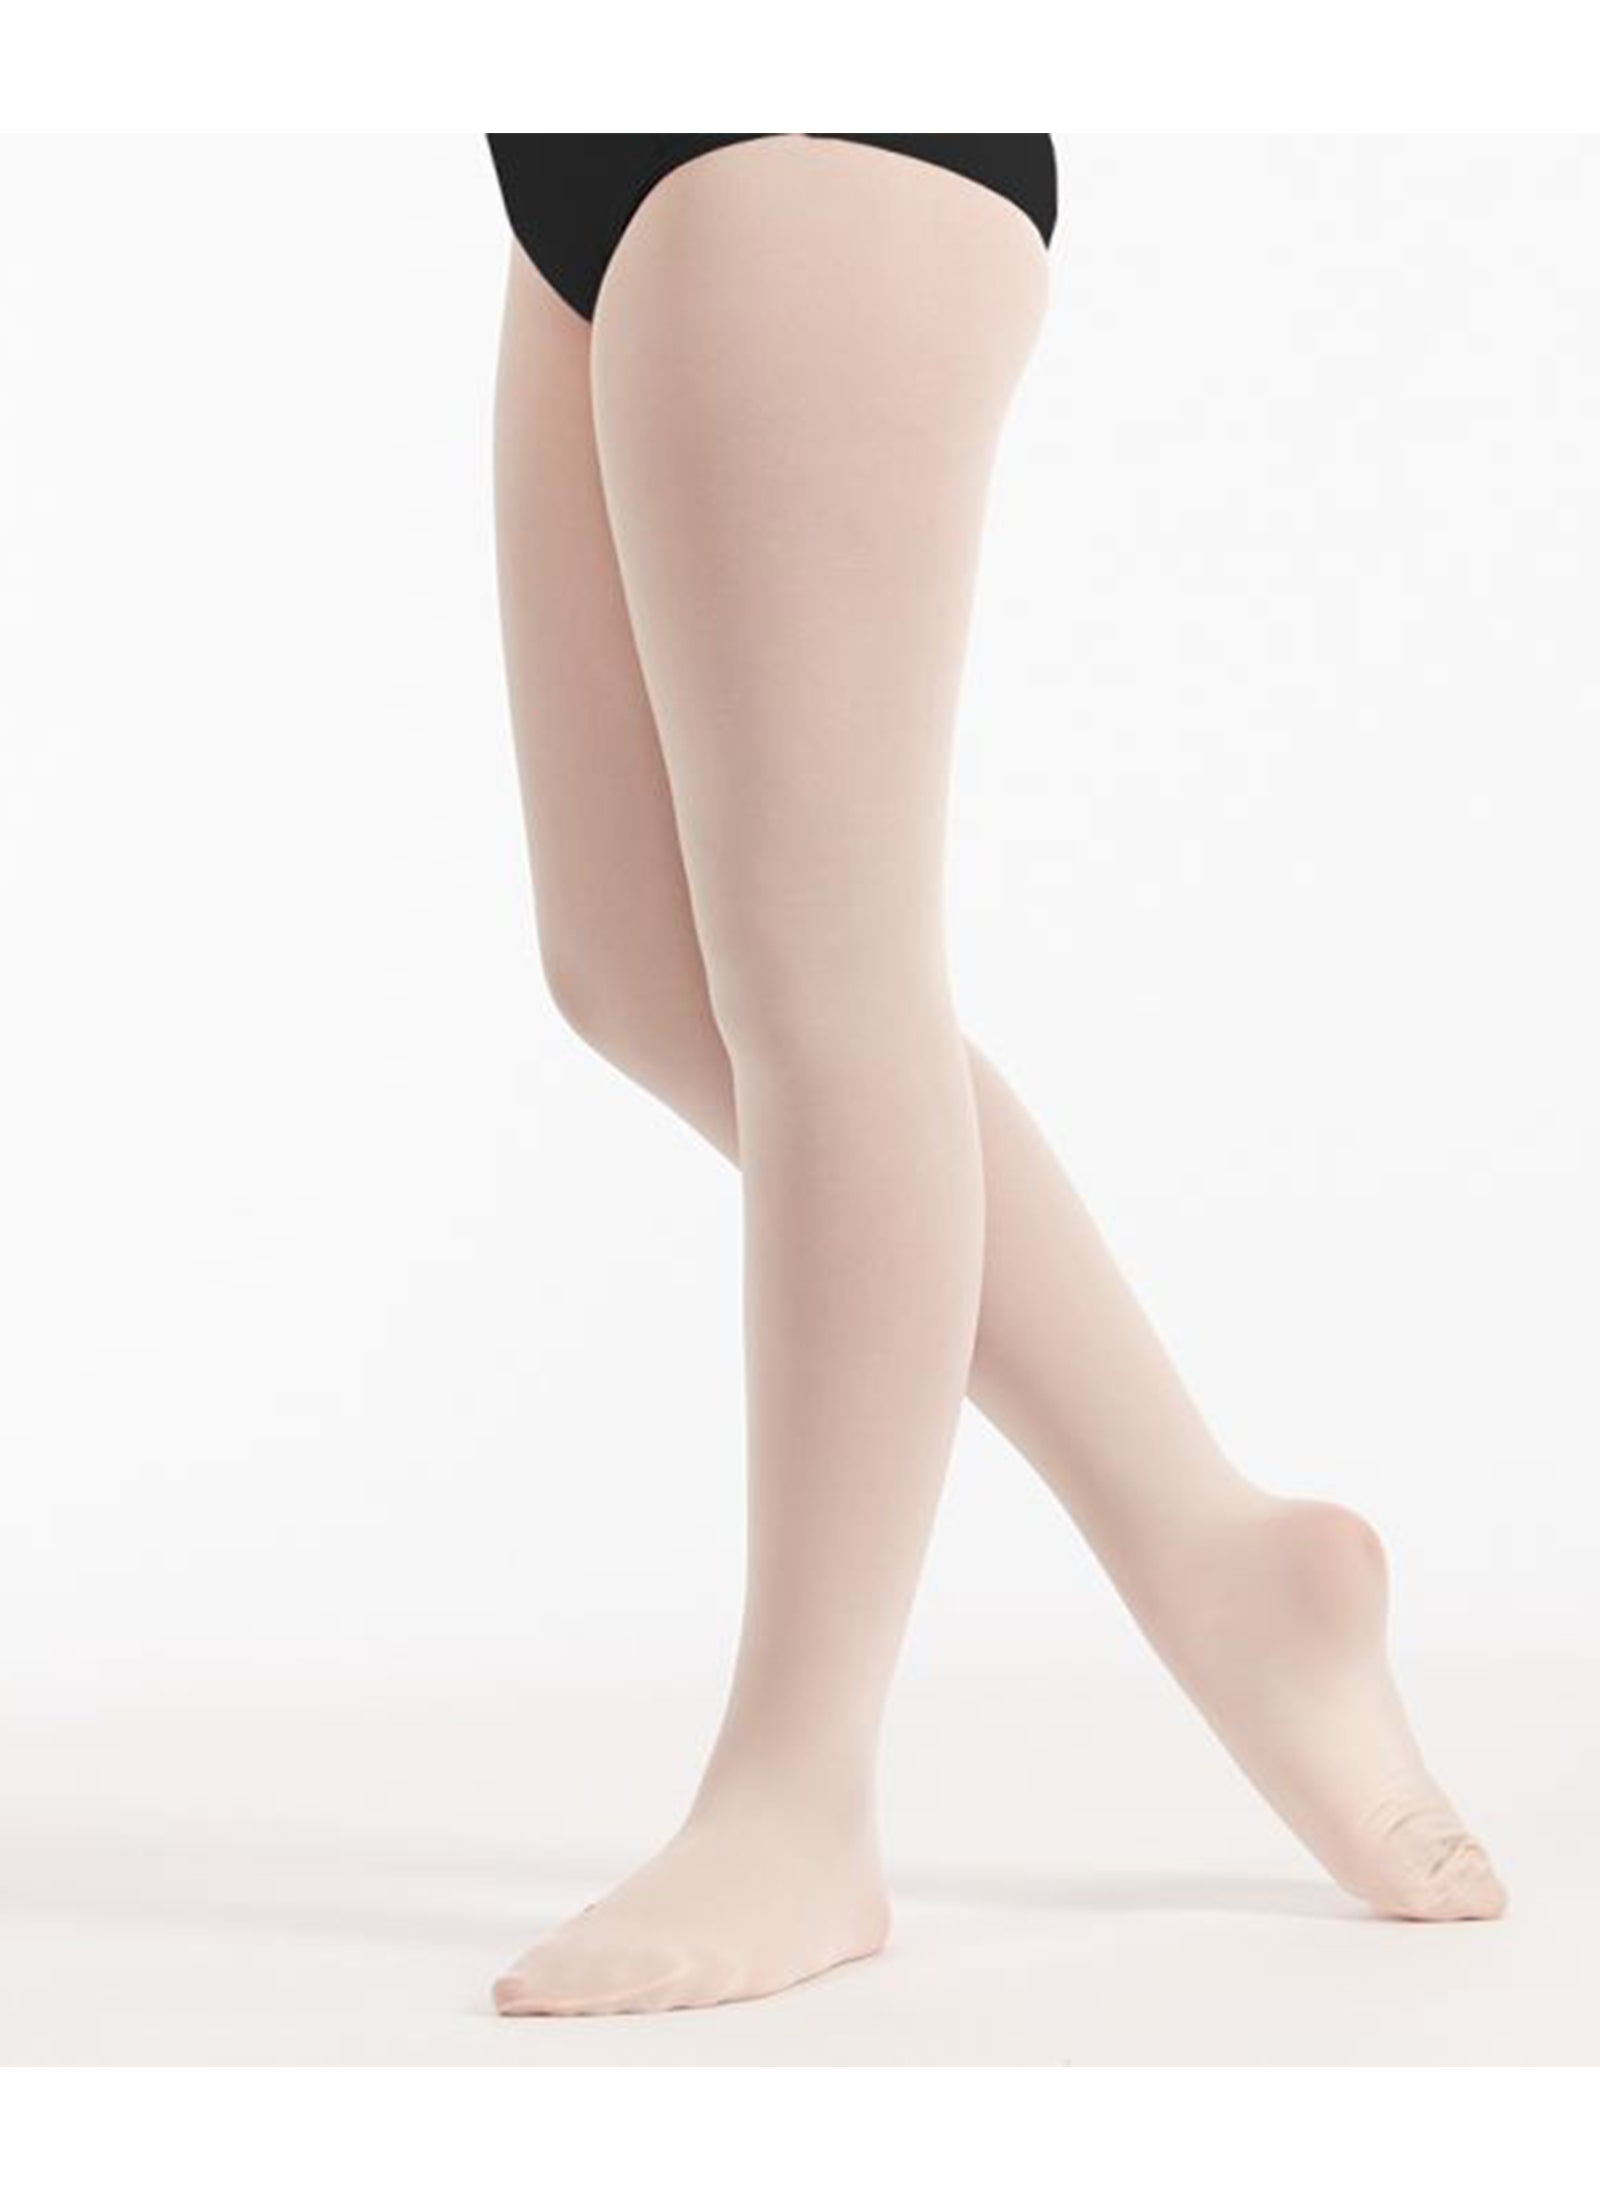 Footless Dance Tights, girls footless tights - Amazing Dancewear